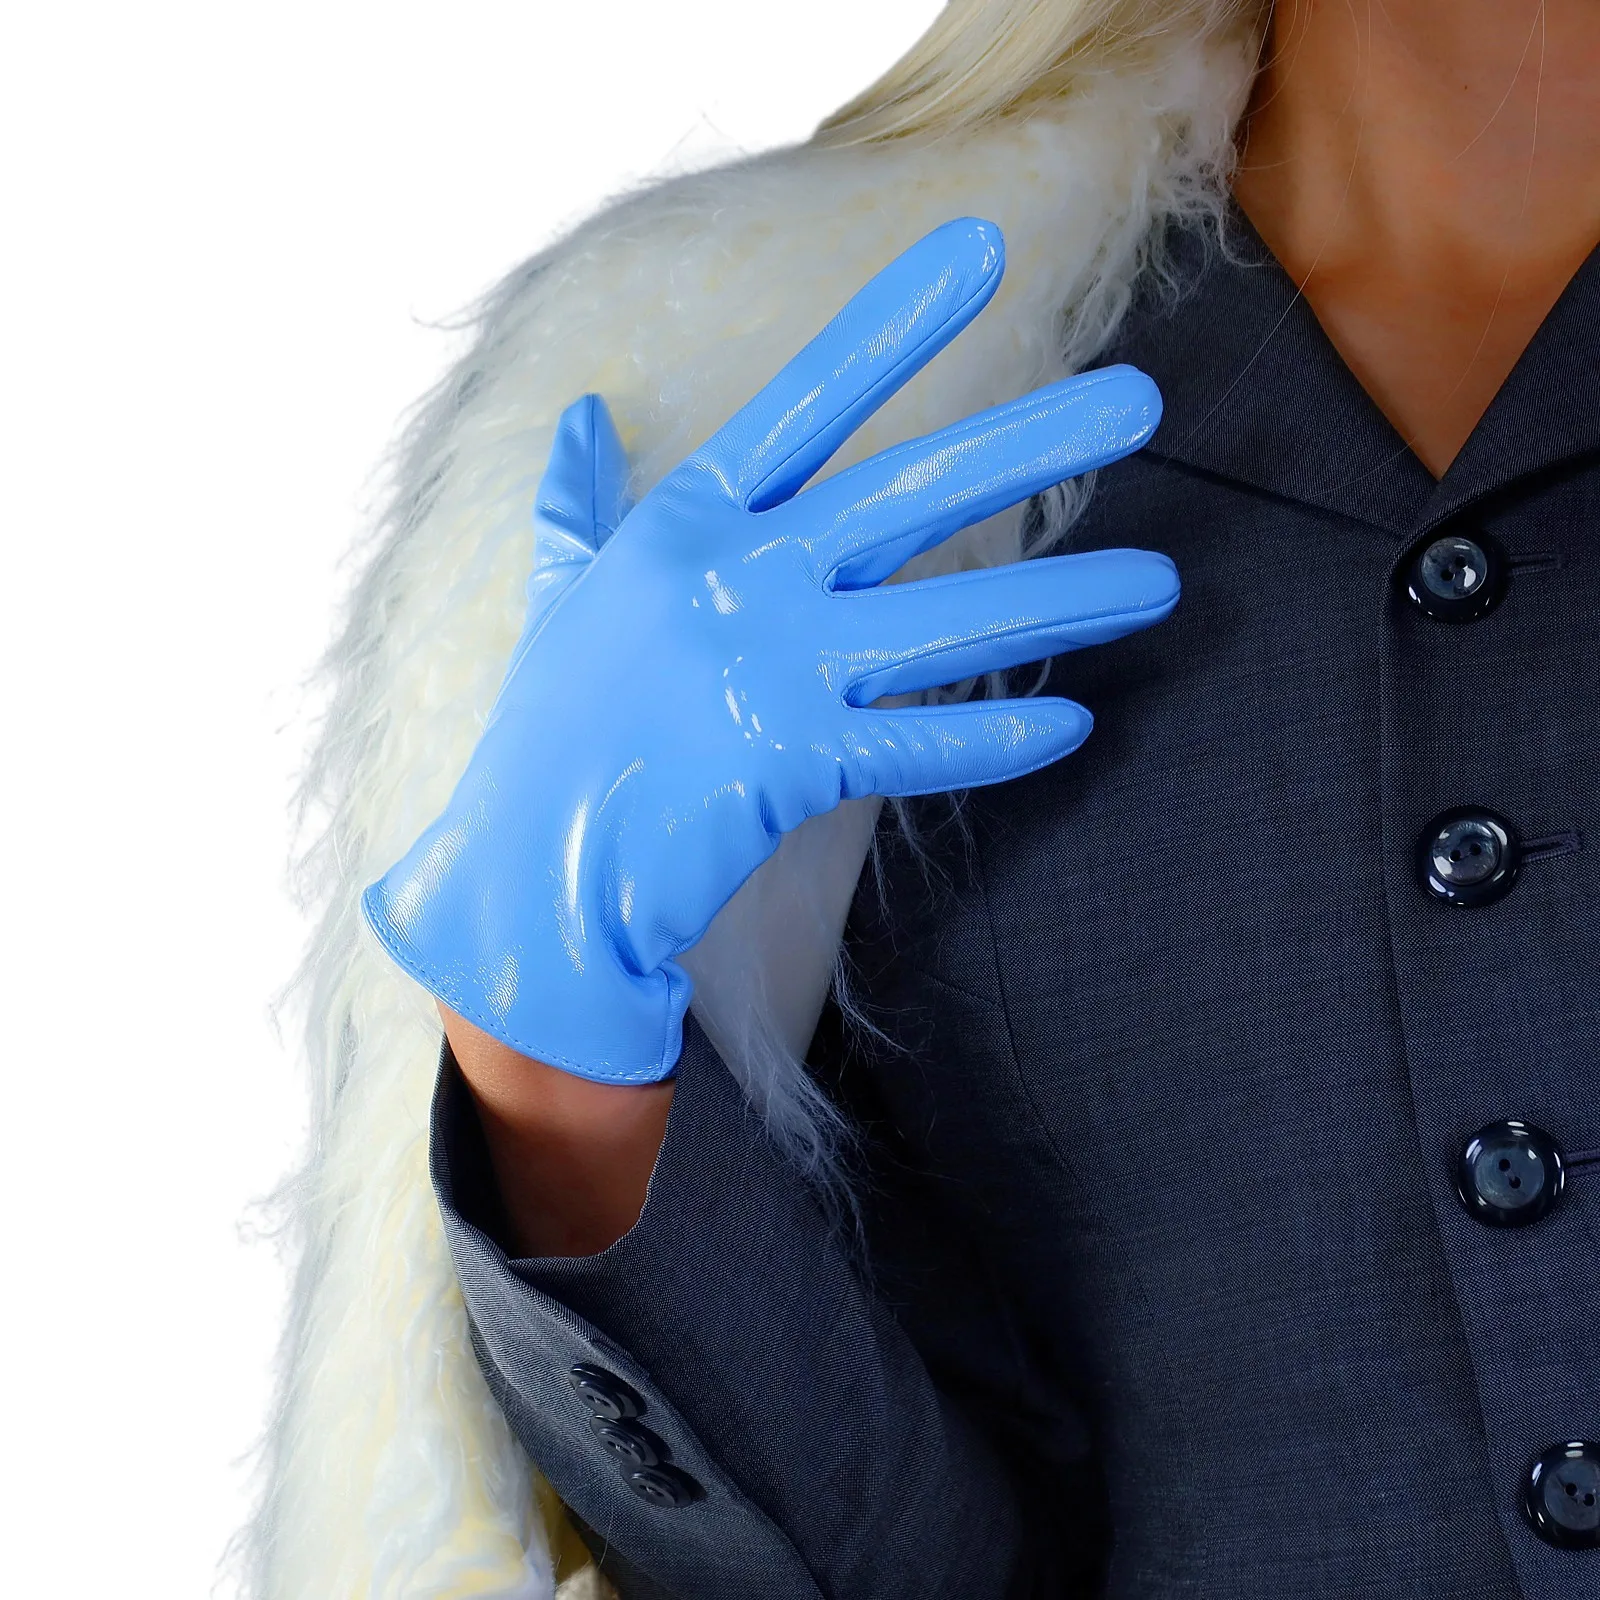 

DooWay Women's Short Leather Gloves Powder Blue Wrist Long Shine Wet look Faux Patent Latex Cosplay Fashion Nightclub Glove